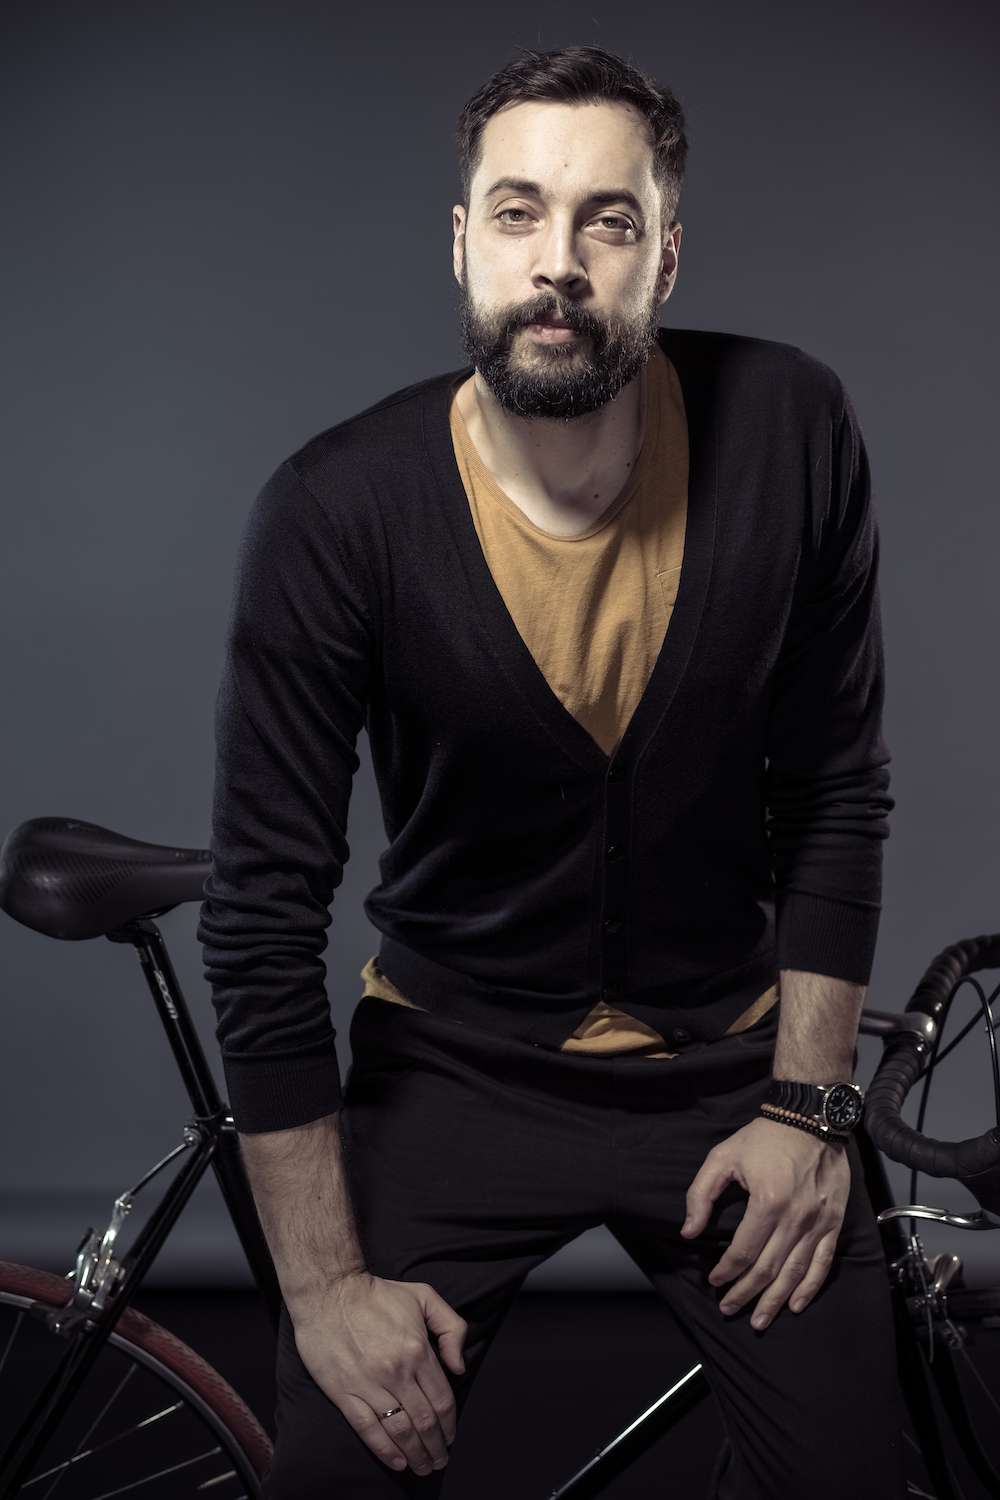 man wearing a black cardigan sitting on a bike